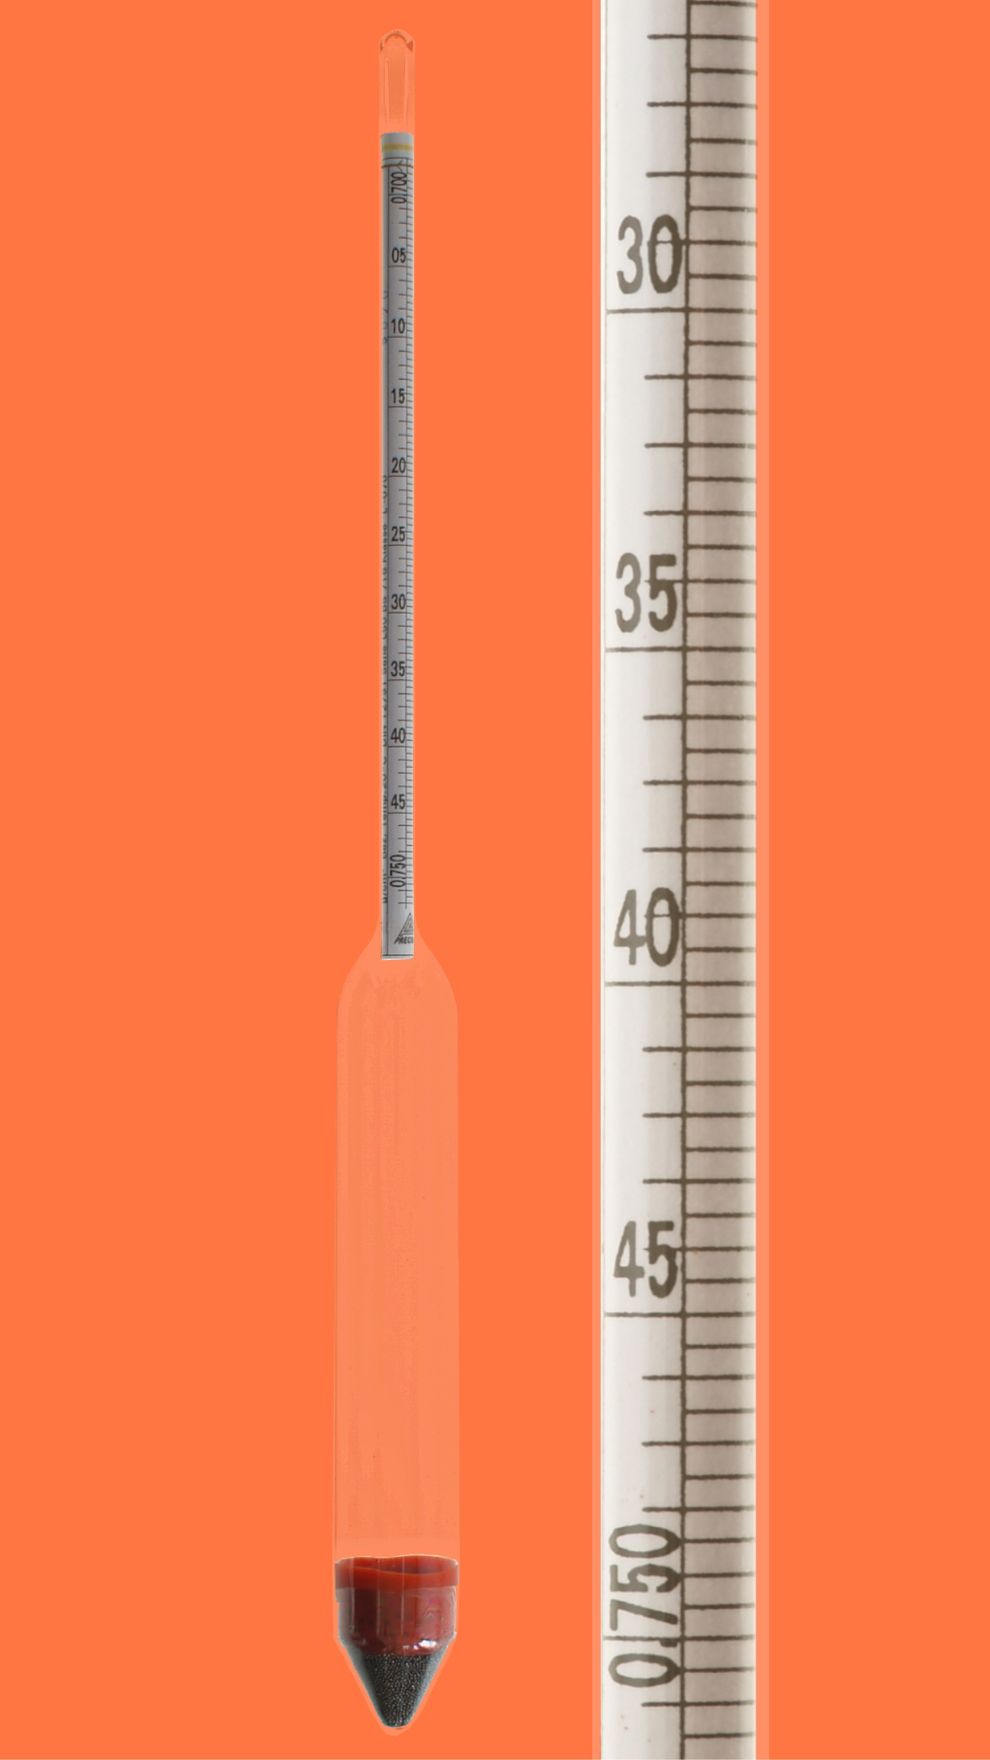 Aräometer, DIN 12791, L50, 1,75-1,80:0,0005g/cm³, Bezugstemp. 20°C, ohne Thermometer